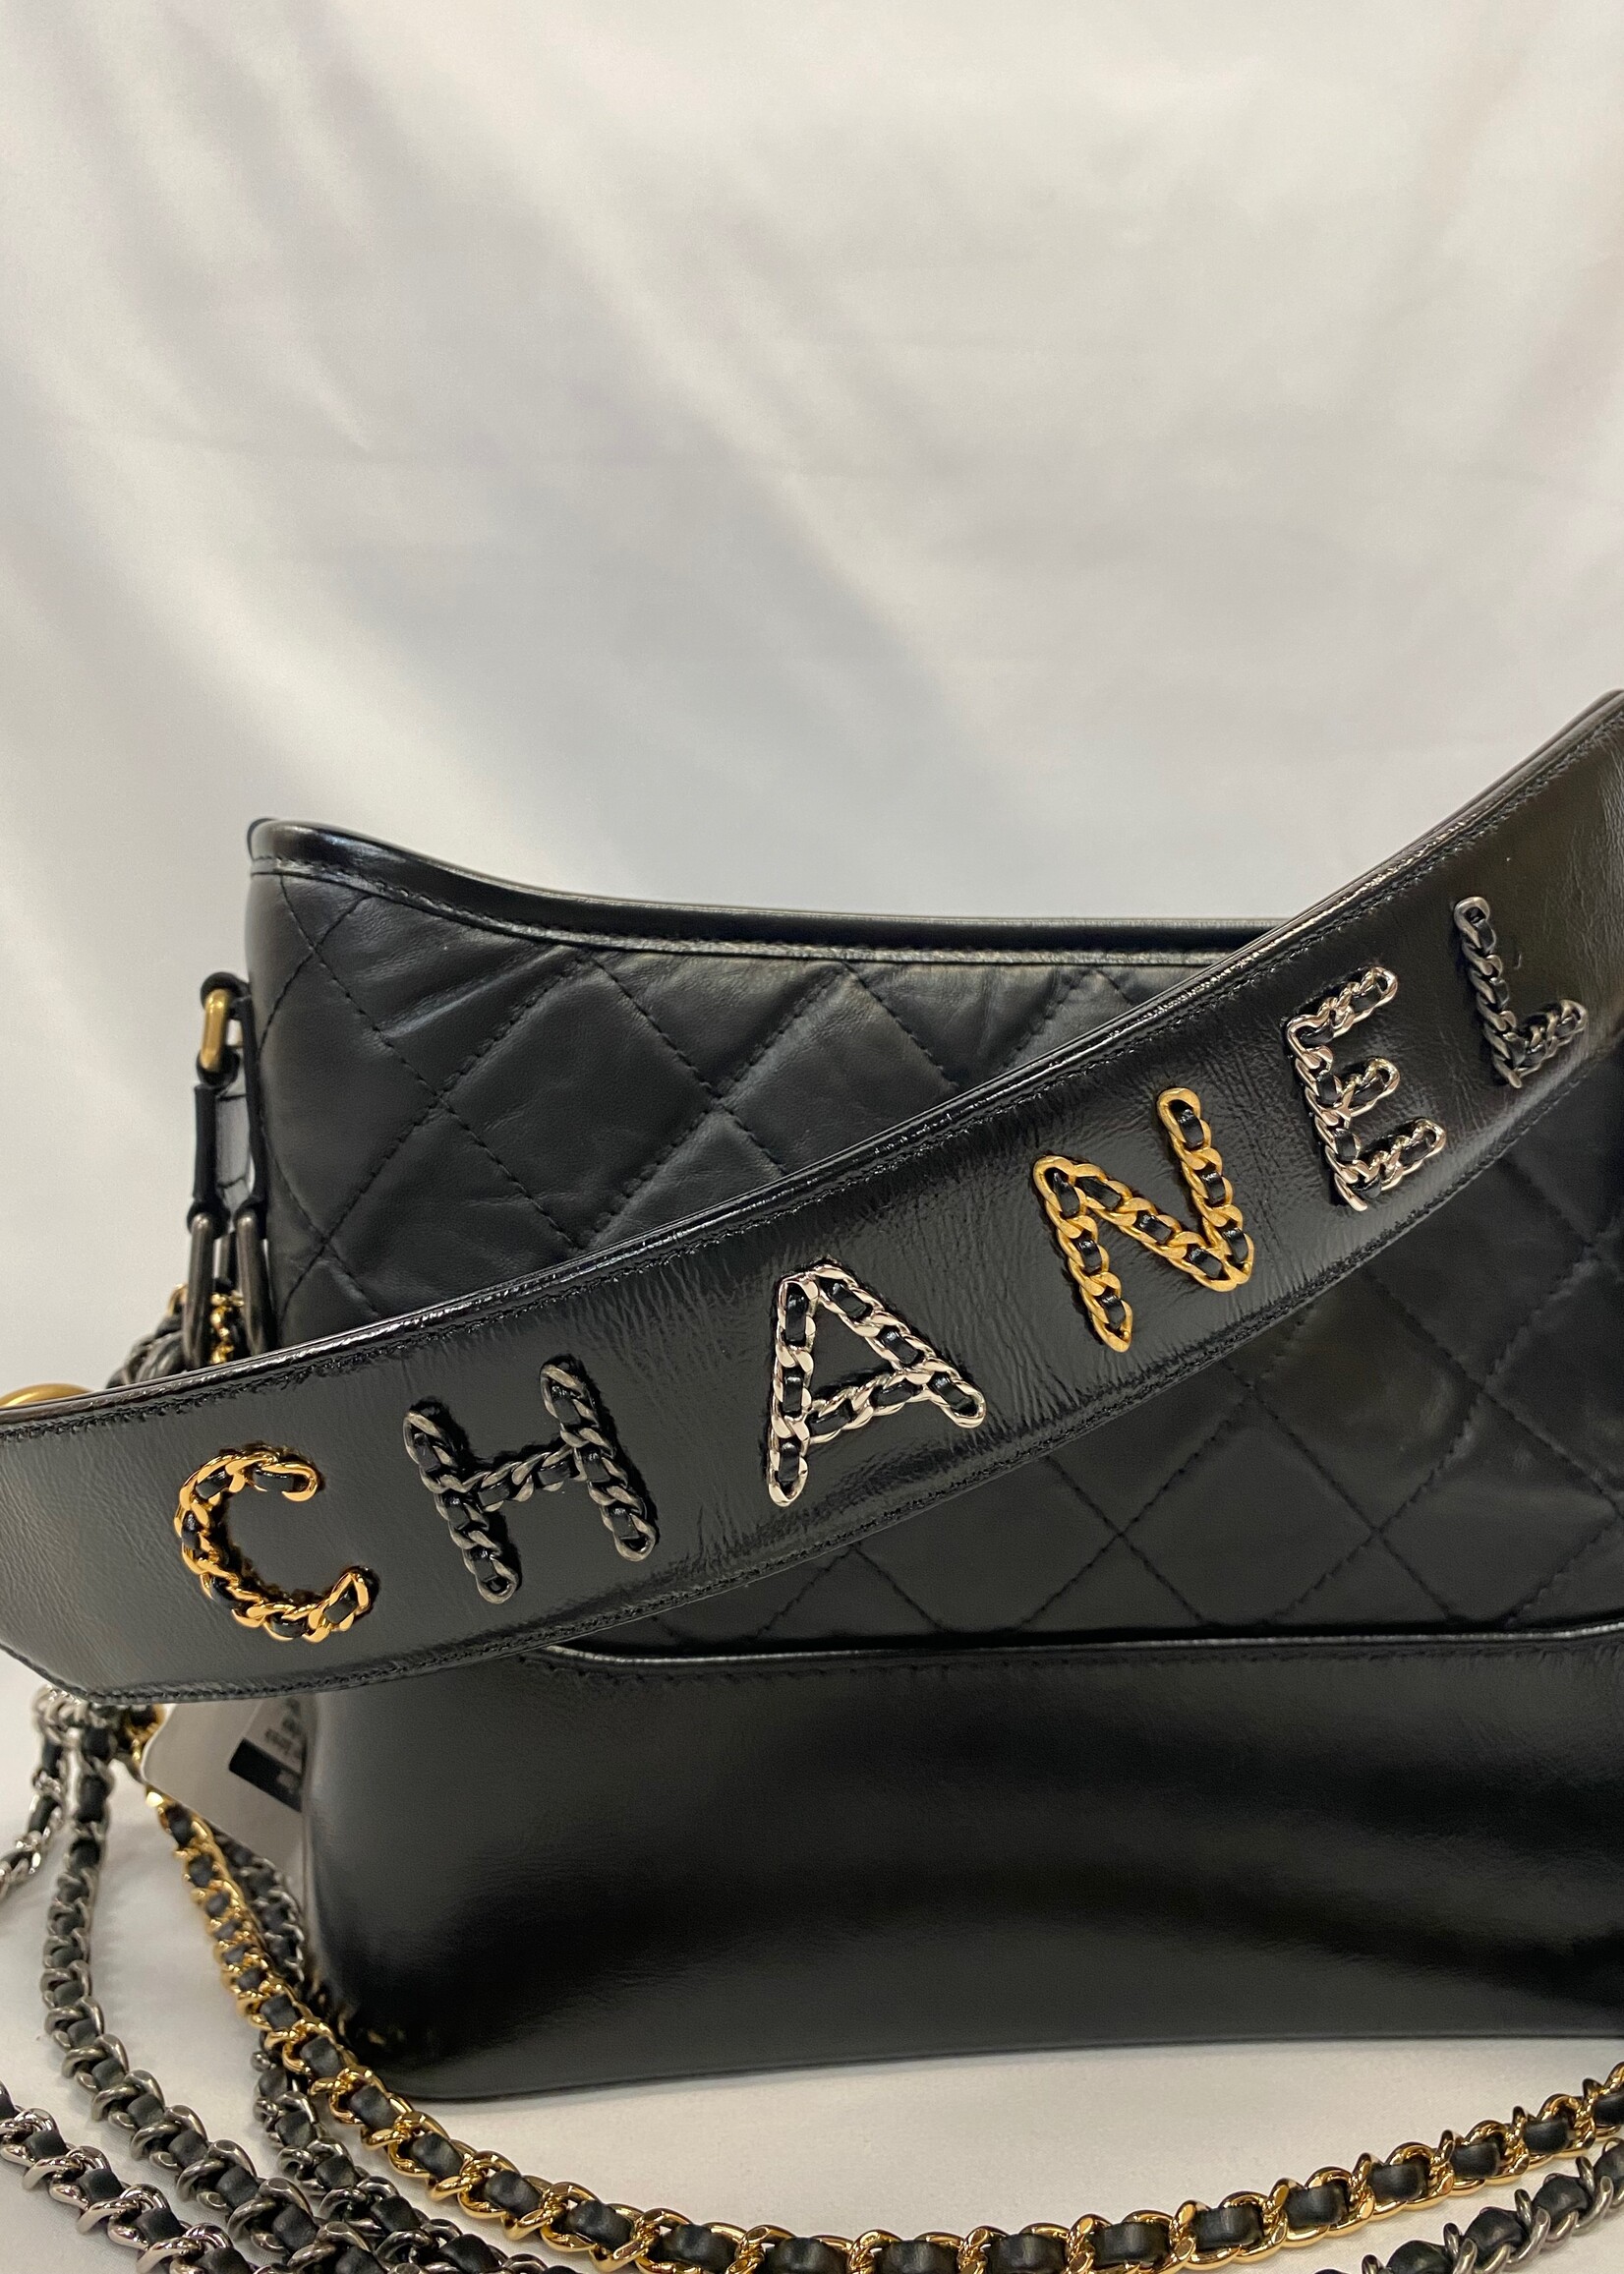 Chanel Chanel Gabrielle Aged Calfskin Limited Edition